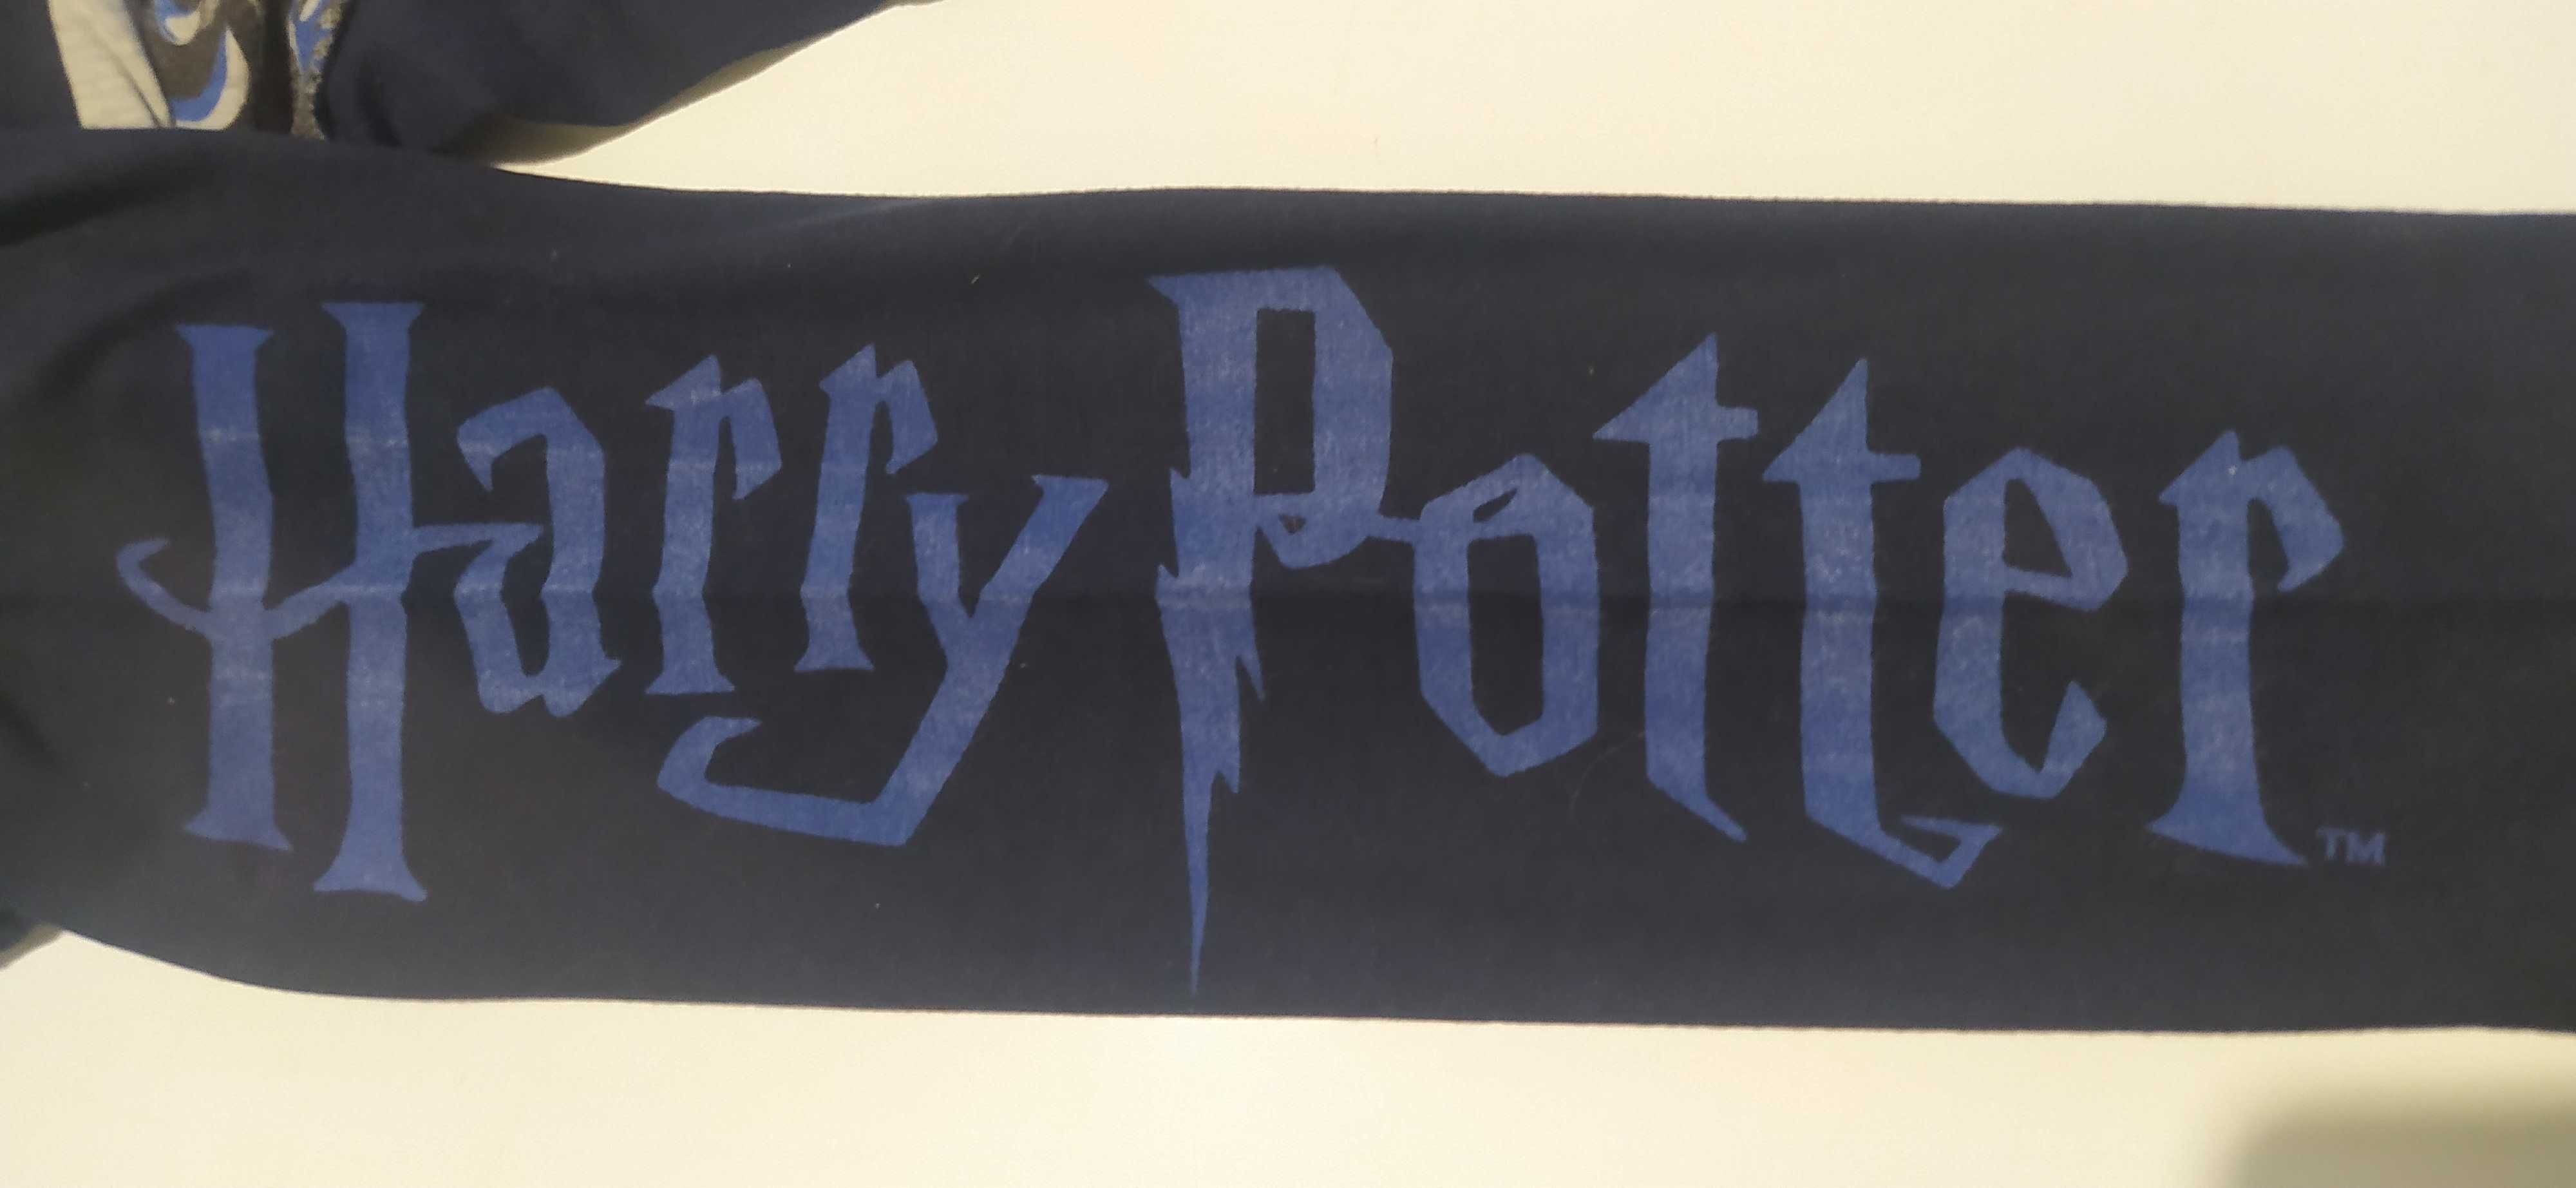 Bluzka Harry Potter r.134/140 granatowa / szara